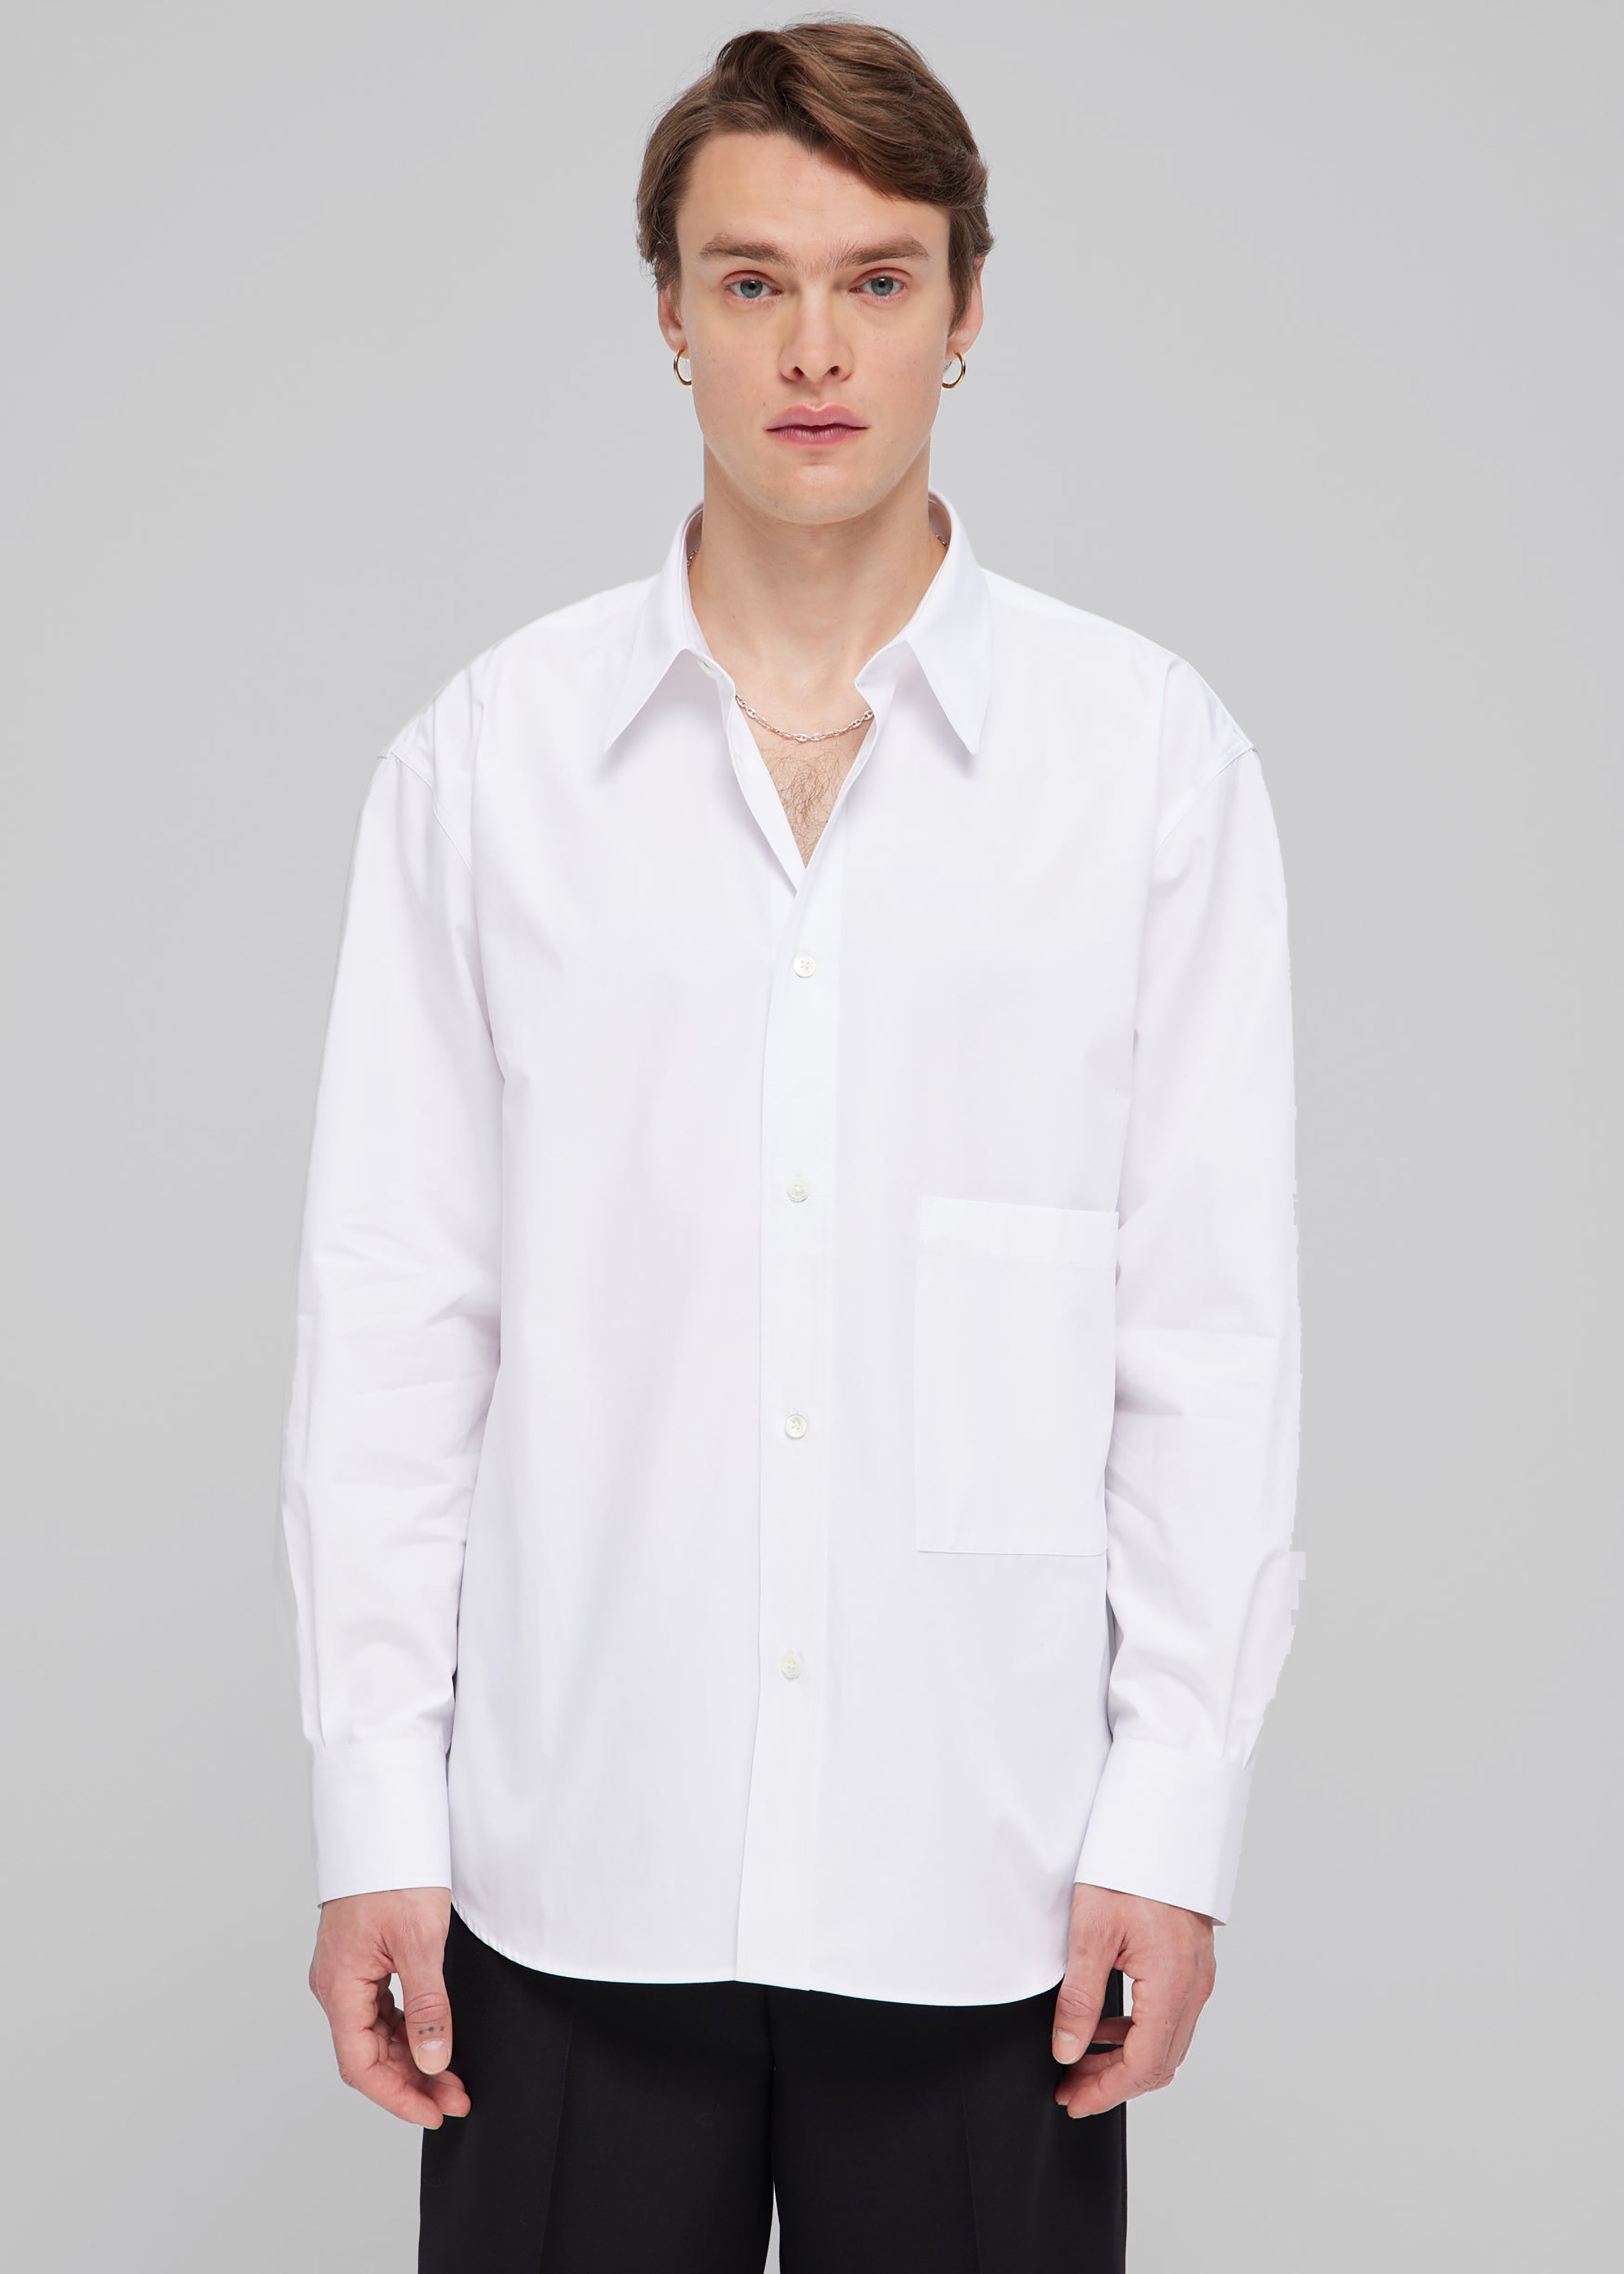 Róhe Unisex Classic Shirt - White - 5 - Róhe Unisex Classic Shirt - White [gender-male]